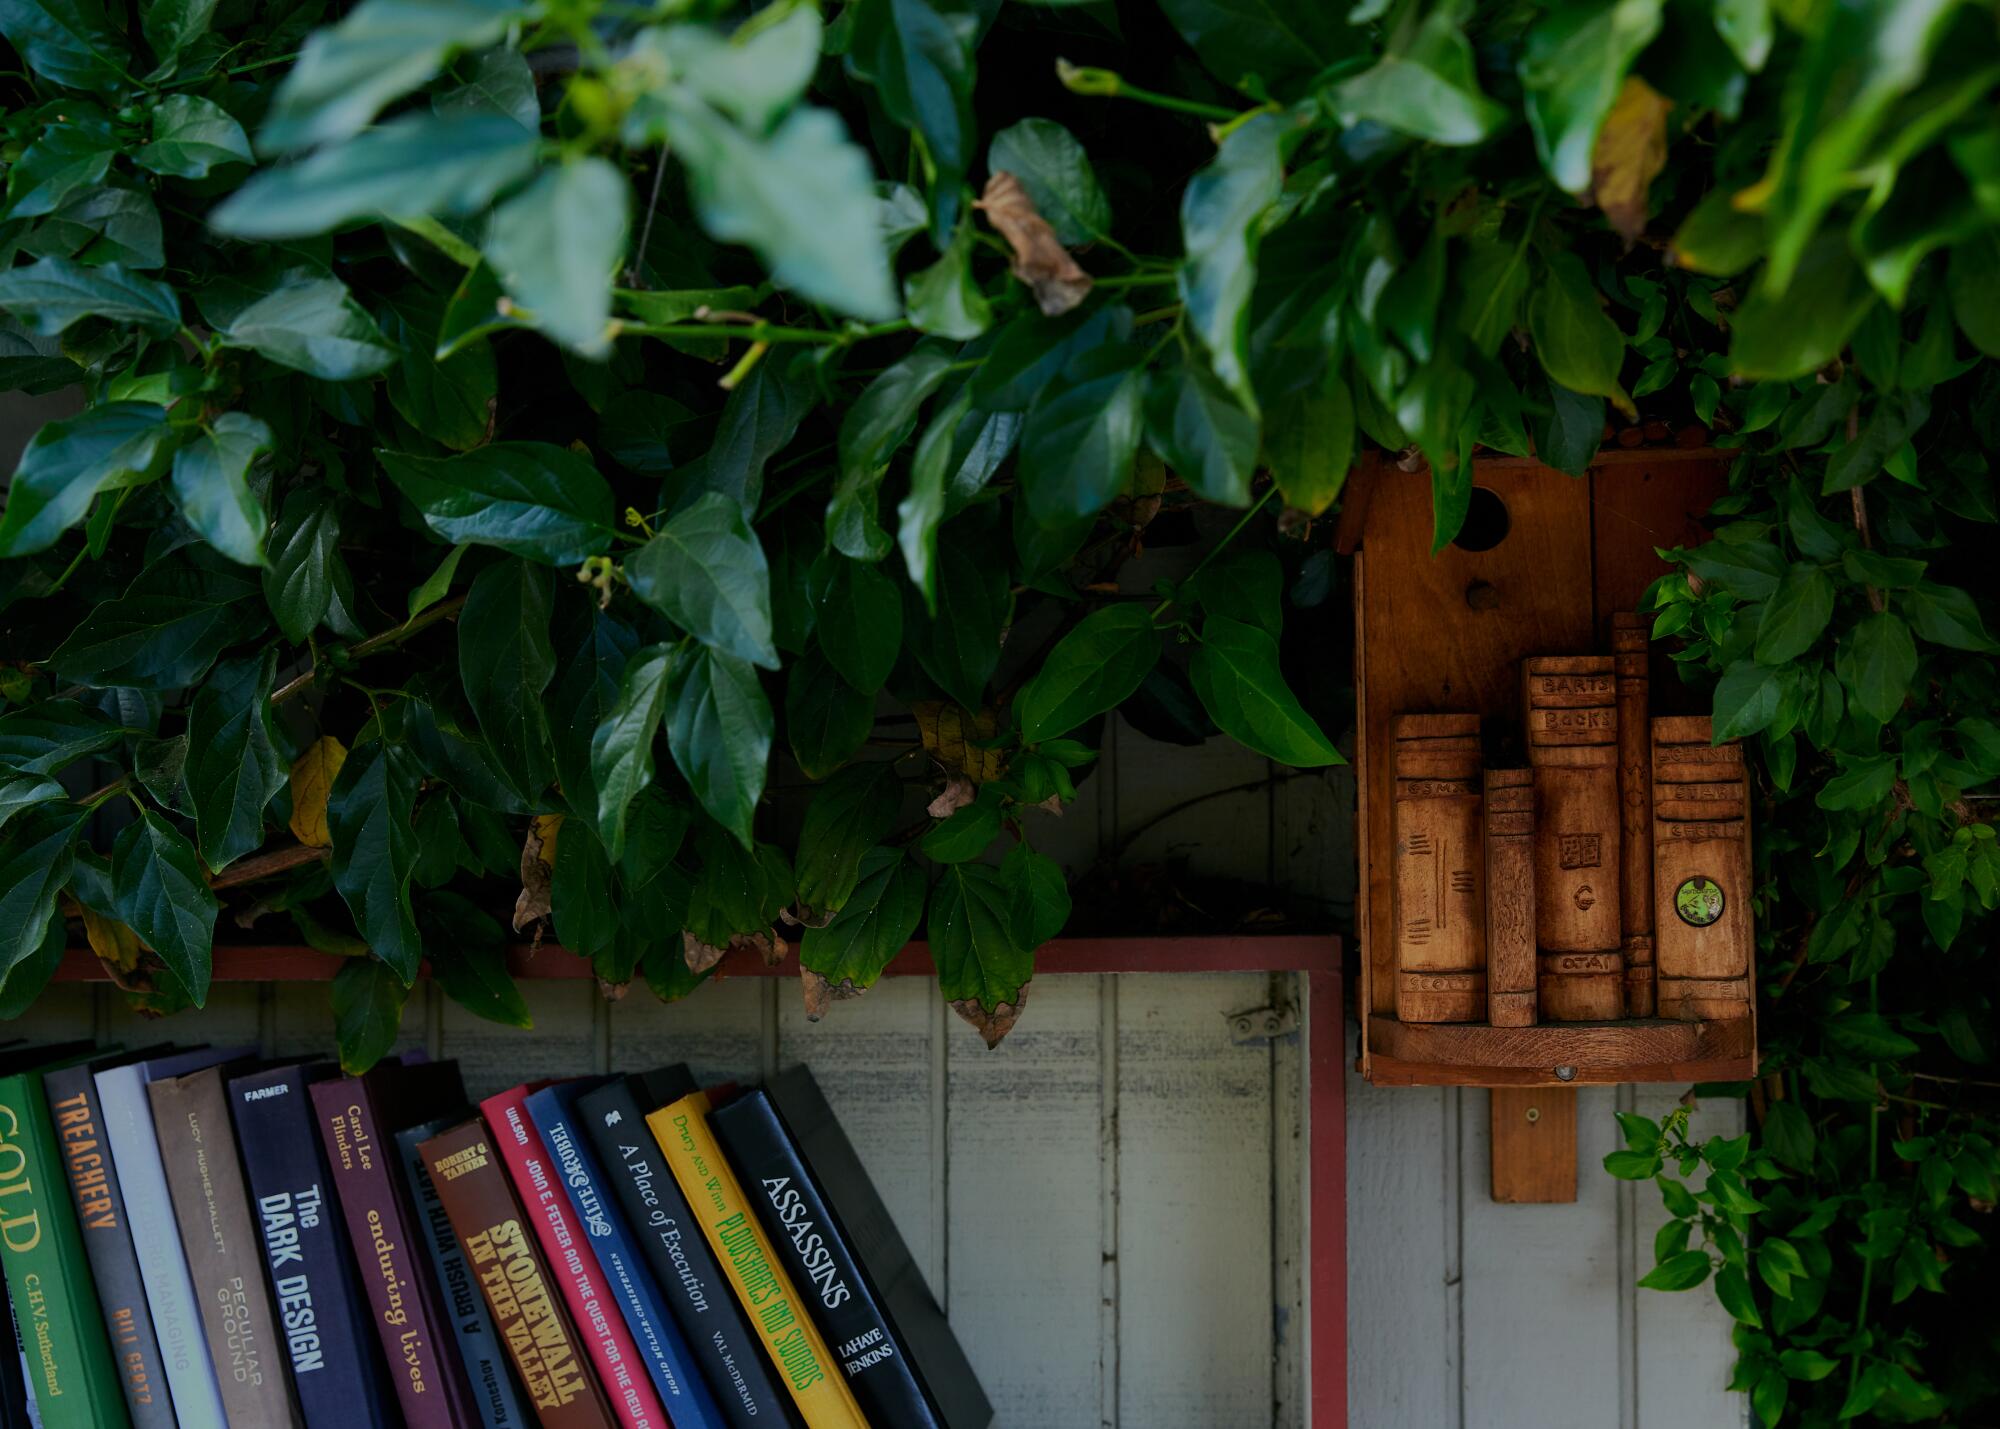 A wood nesting box shaped like books hangs beside bookshelves, with greenery spilling over.